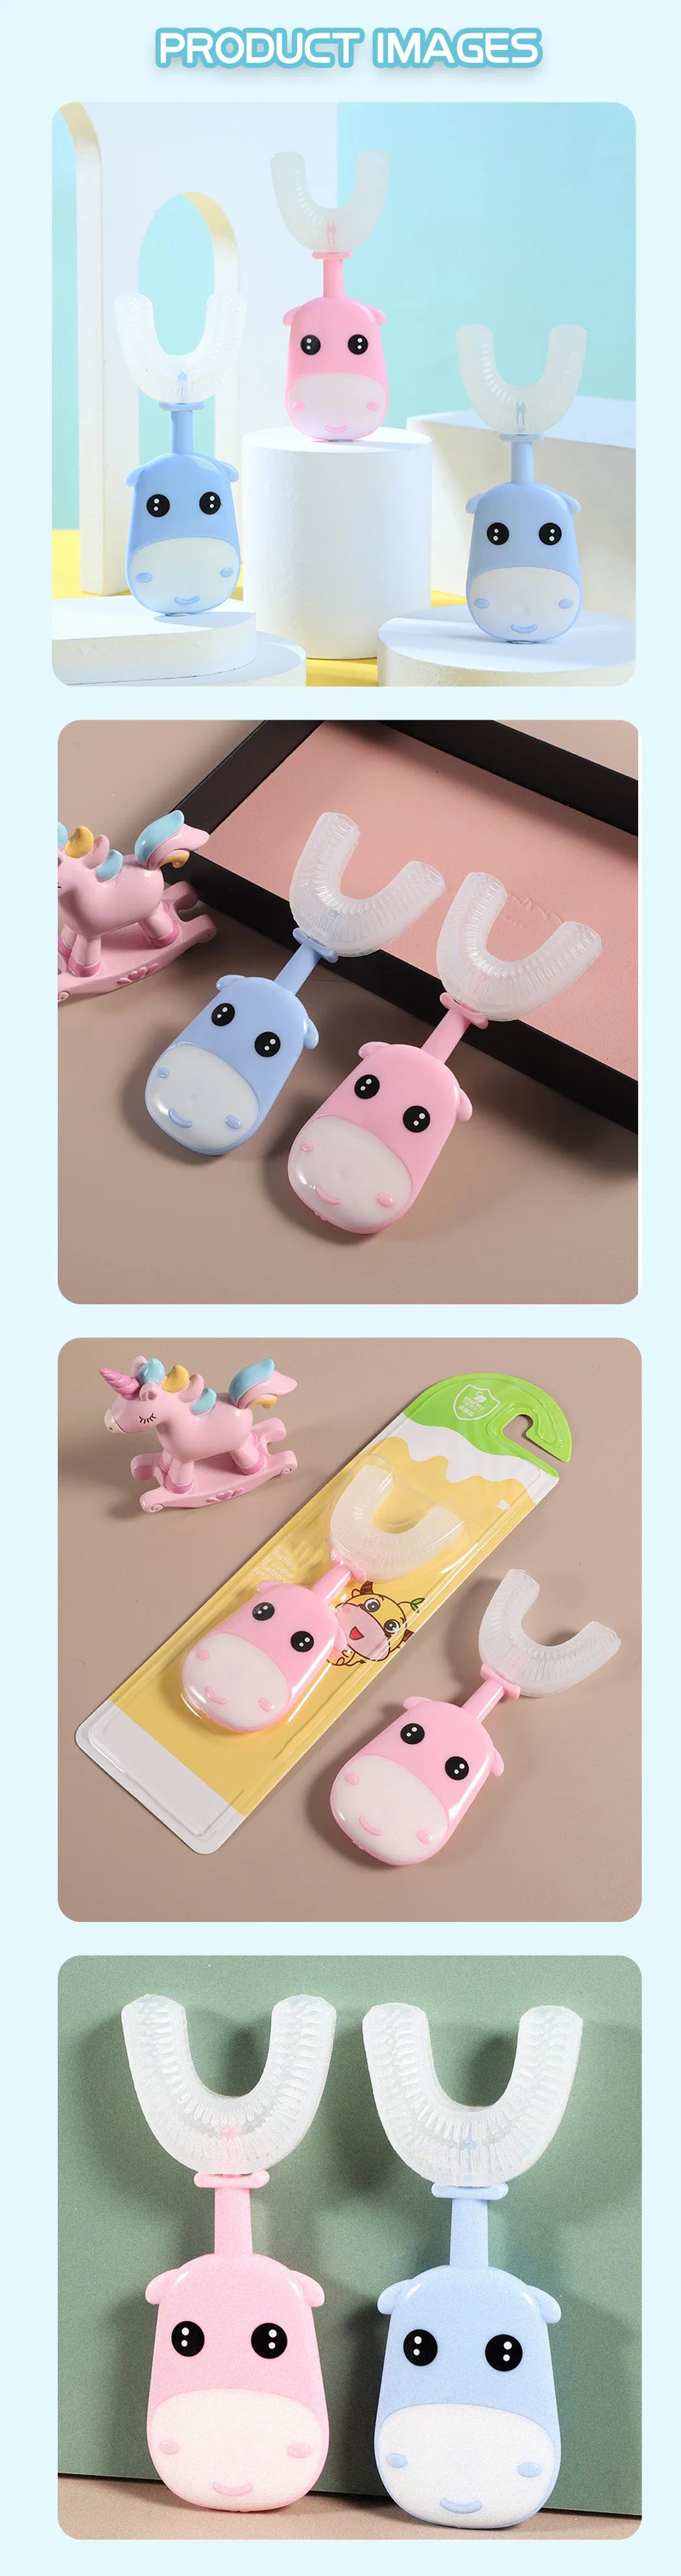 Cute Hippo U Shaped Silicone 360 &deg; Oral Teeth Cleaning Kids Toothbrush